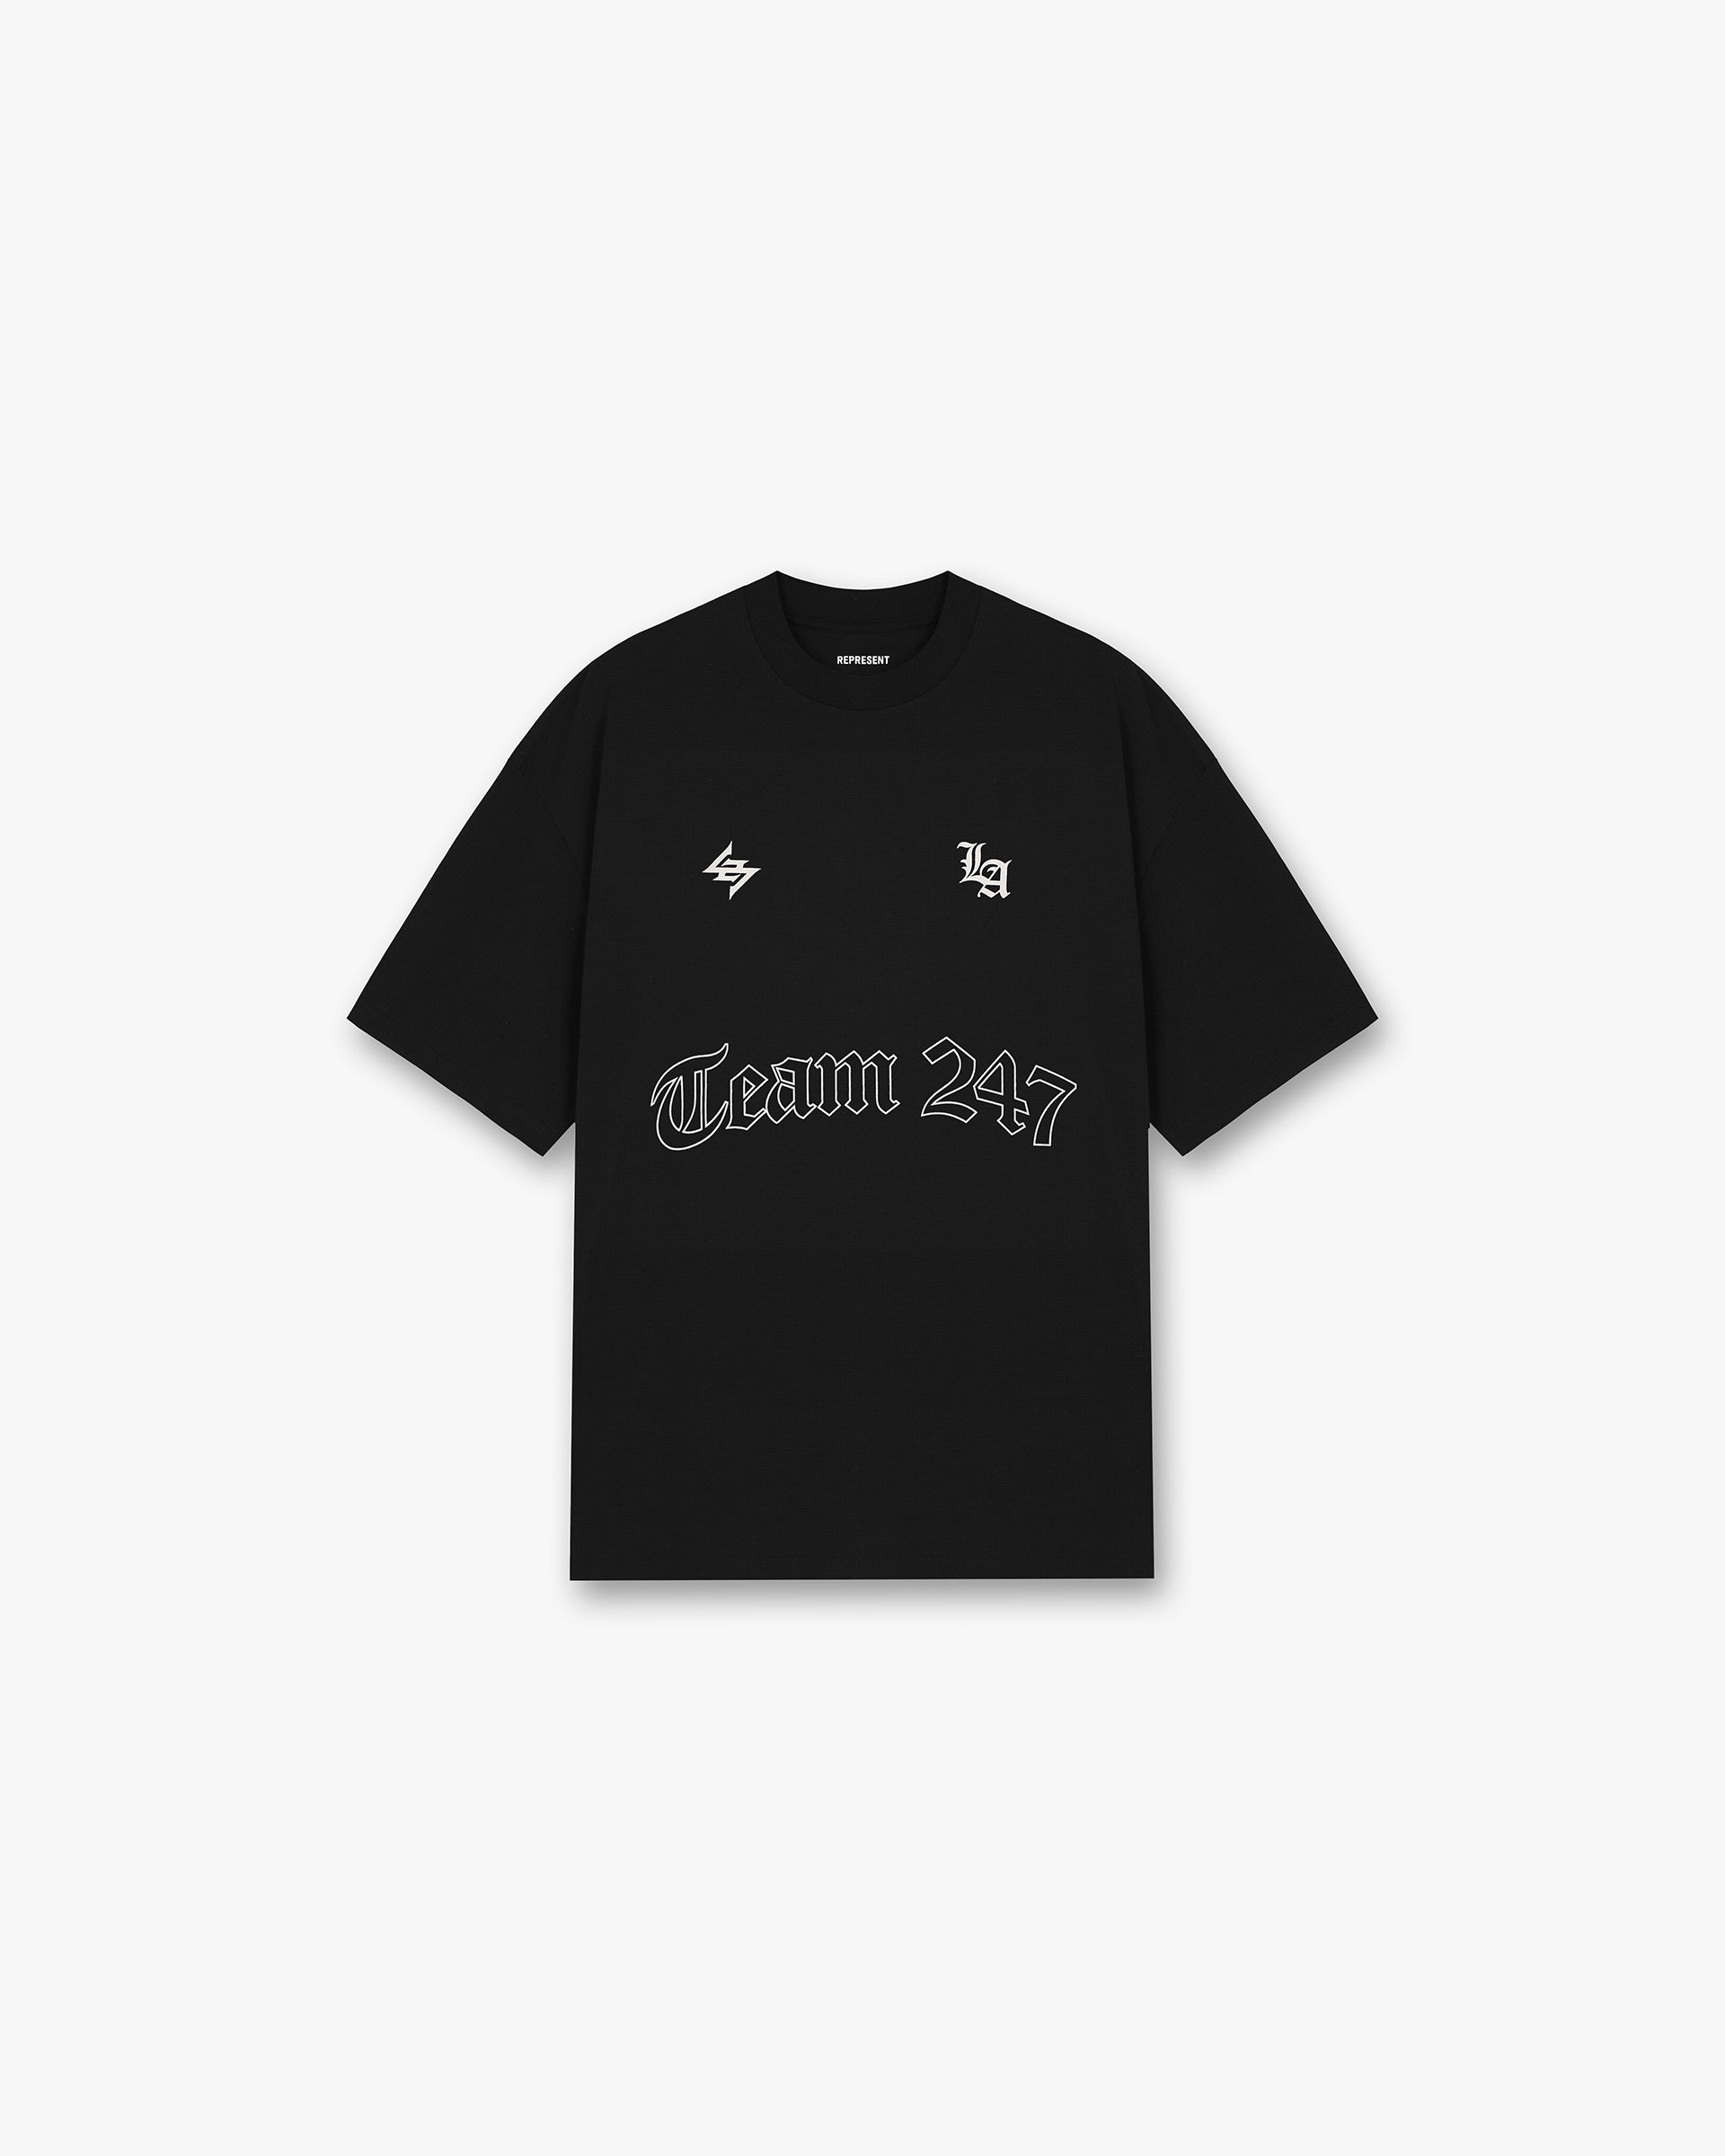 247 LA Marathon Oversized T-Shirt - Black